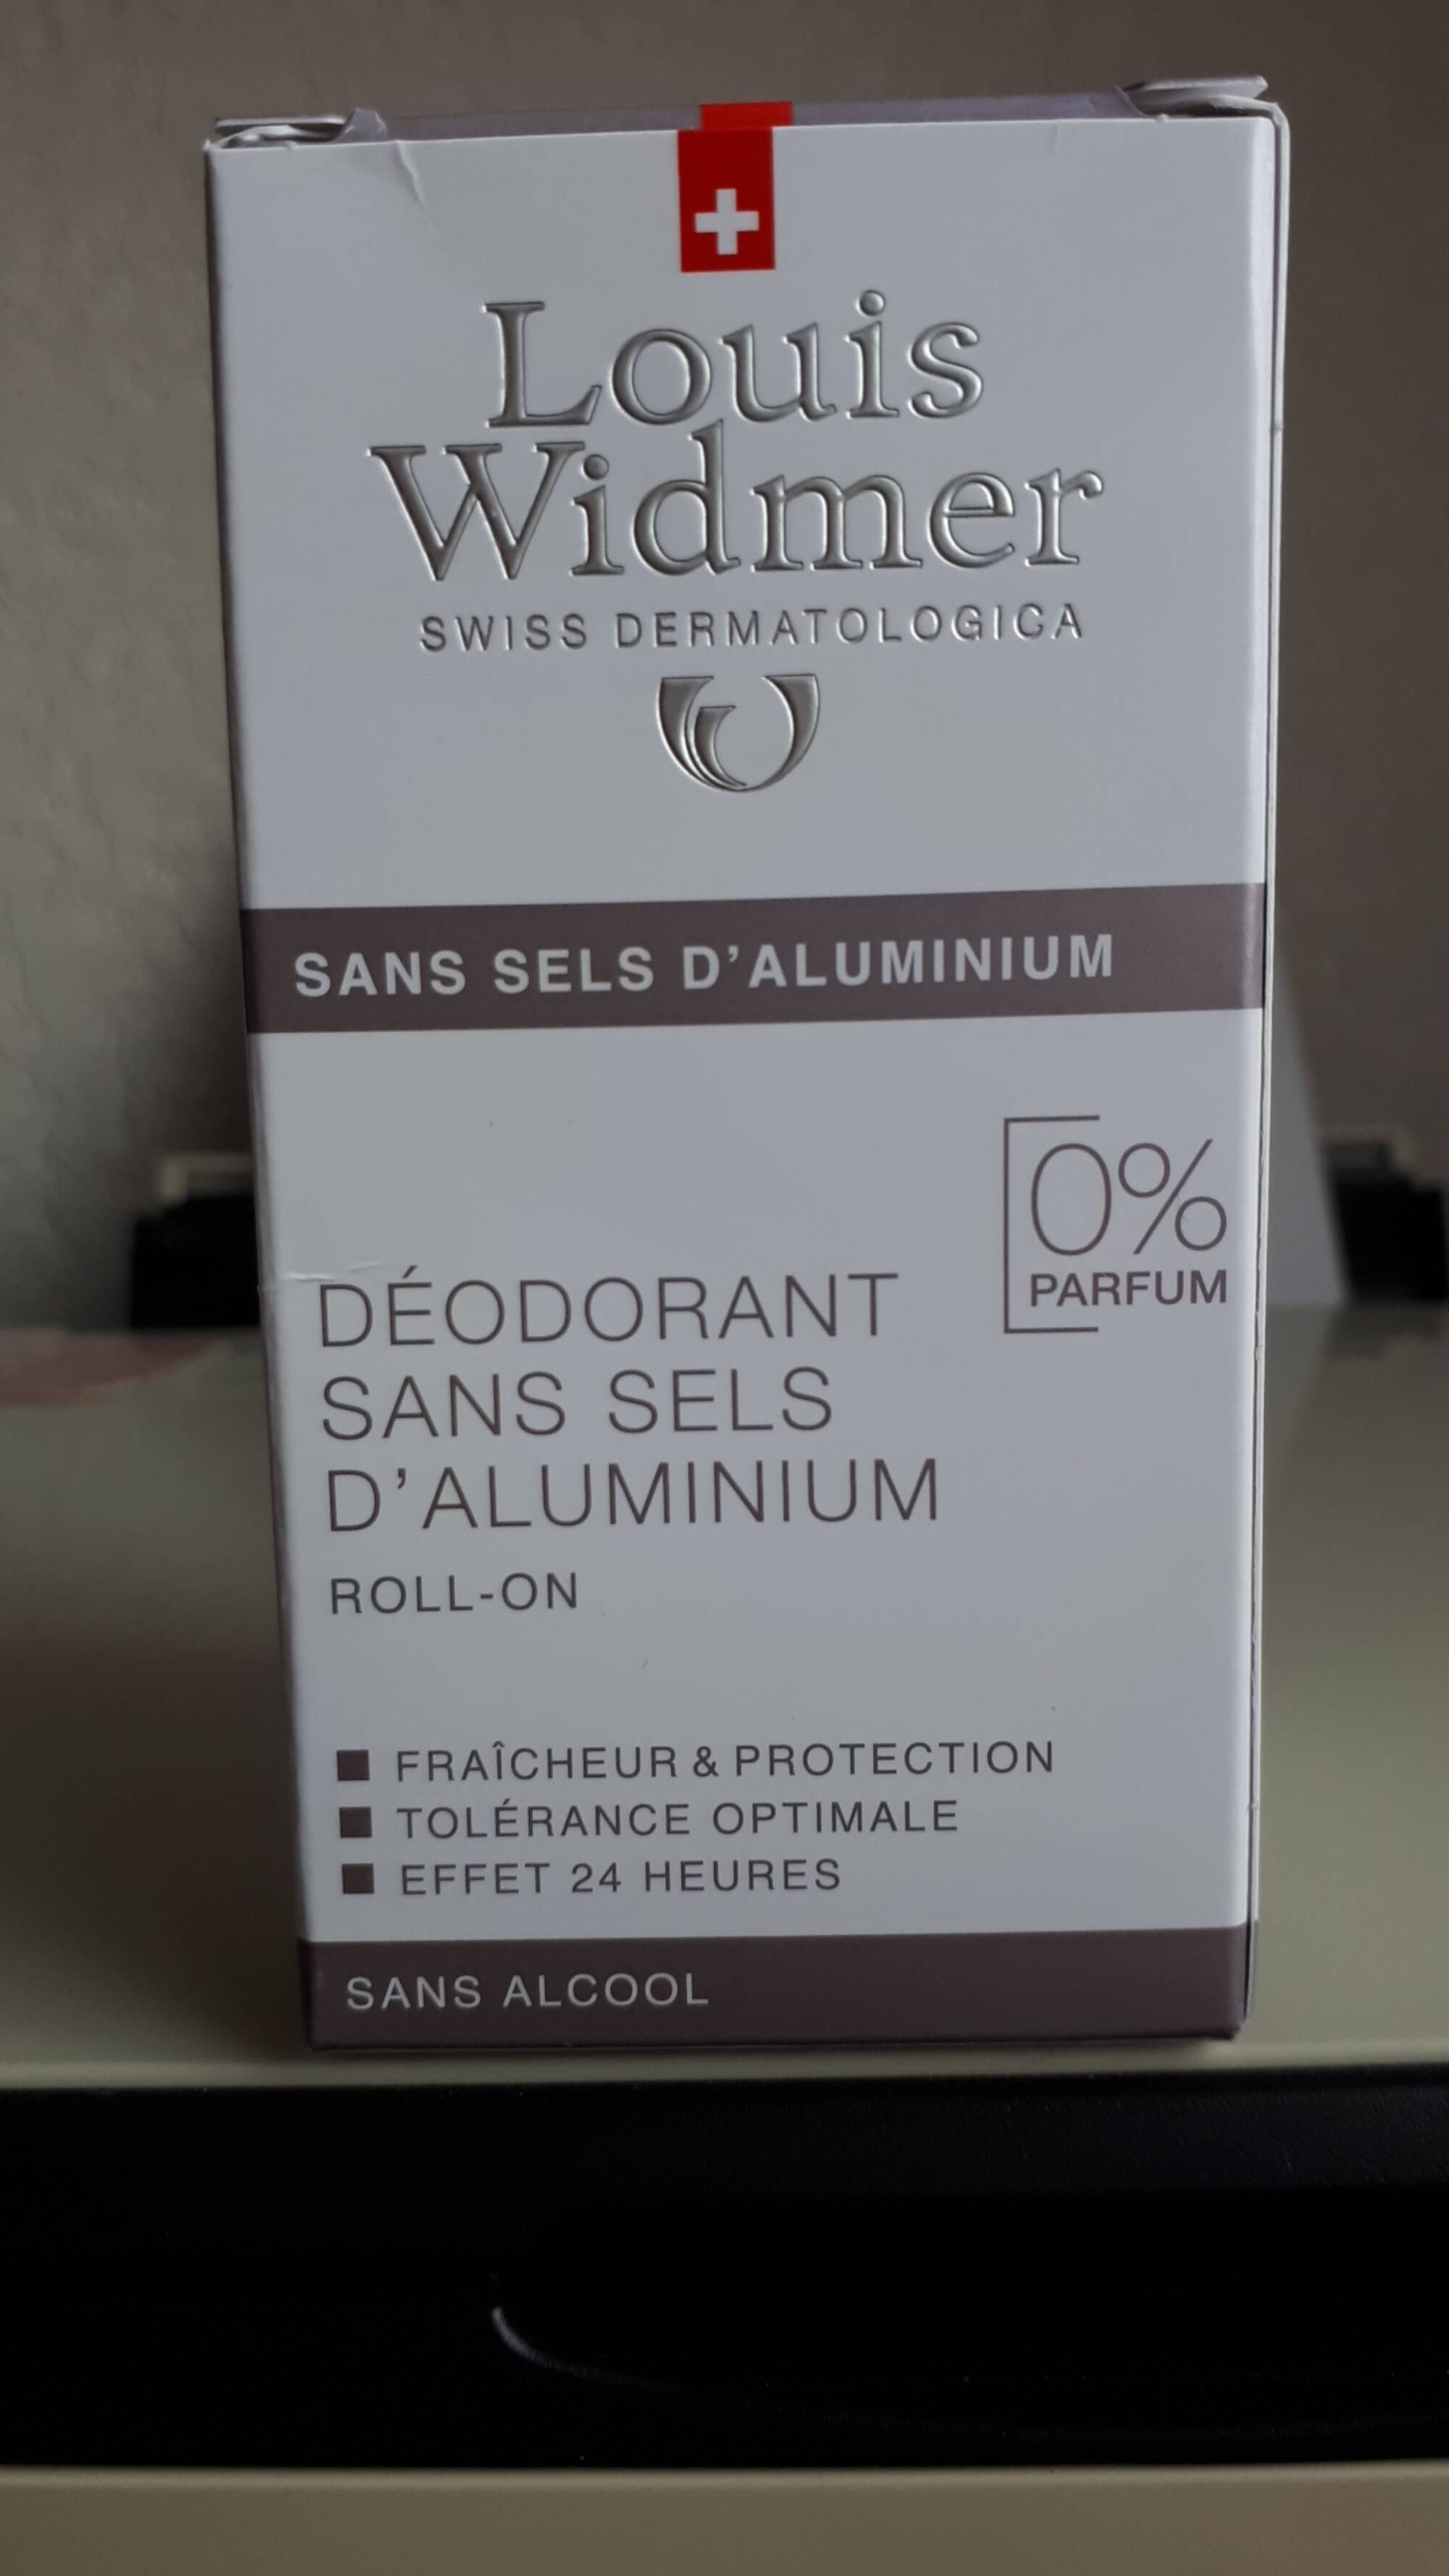 LOUIS WIDMER - Déodorant sans sels d'aluminium